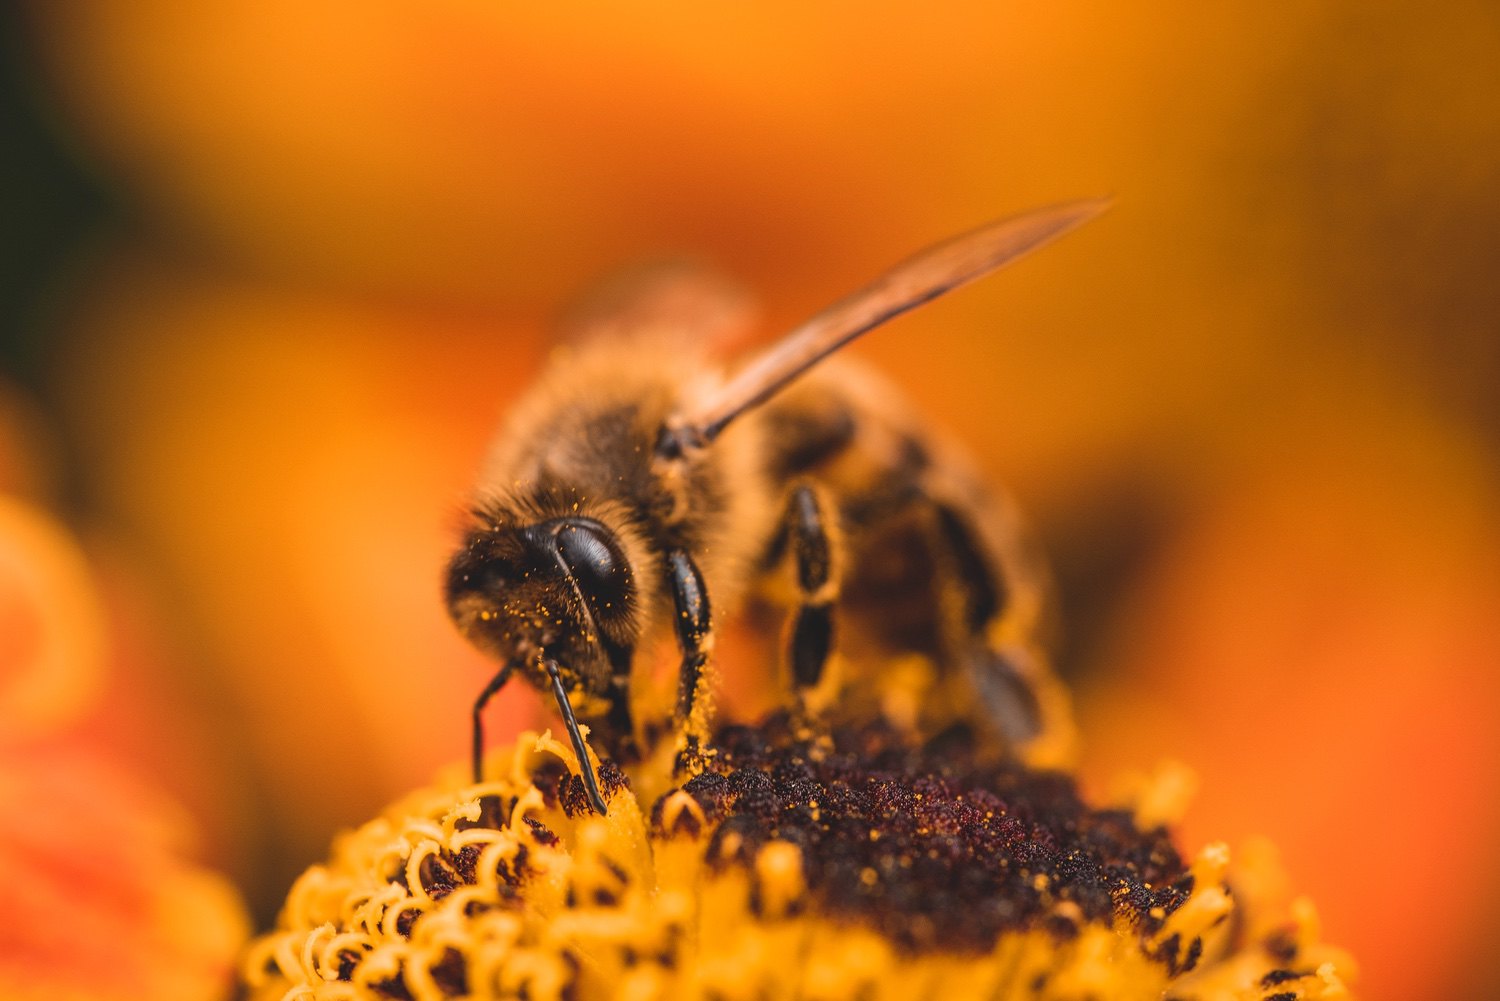 A tiny bee on an orange plant